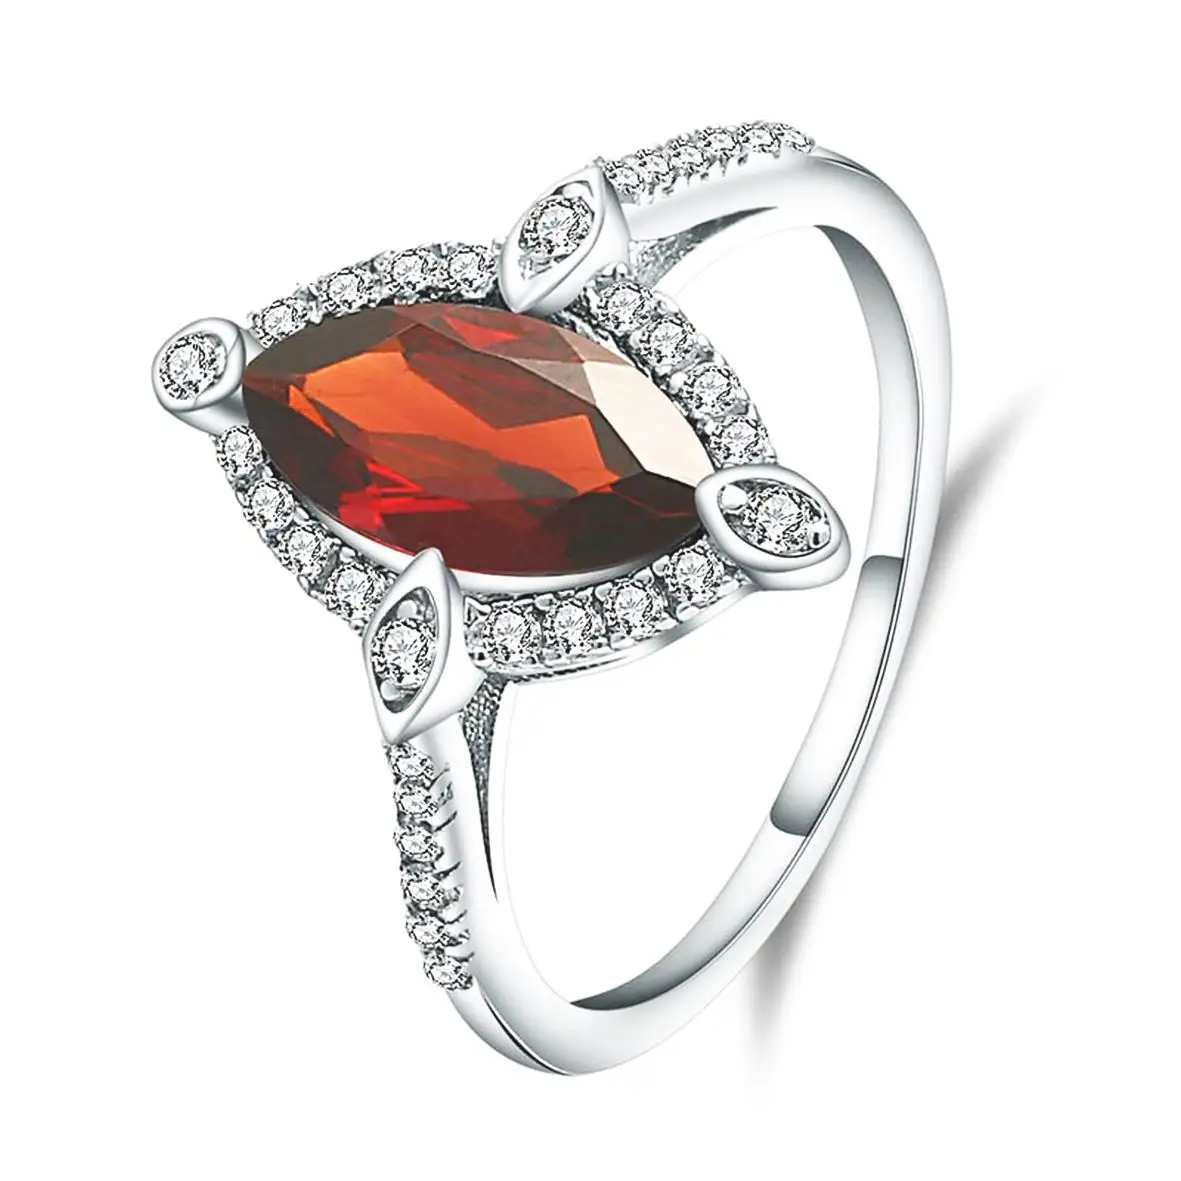 Garnet Engagement Ring Set925 Sterling Silver Garnet Jewelry With DiamondLeaves Shape Garnet Engagement ring Meaning